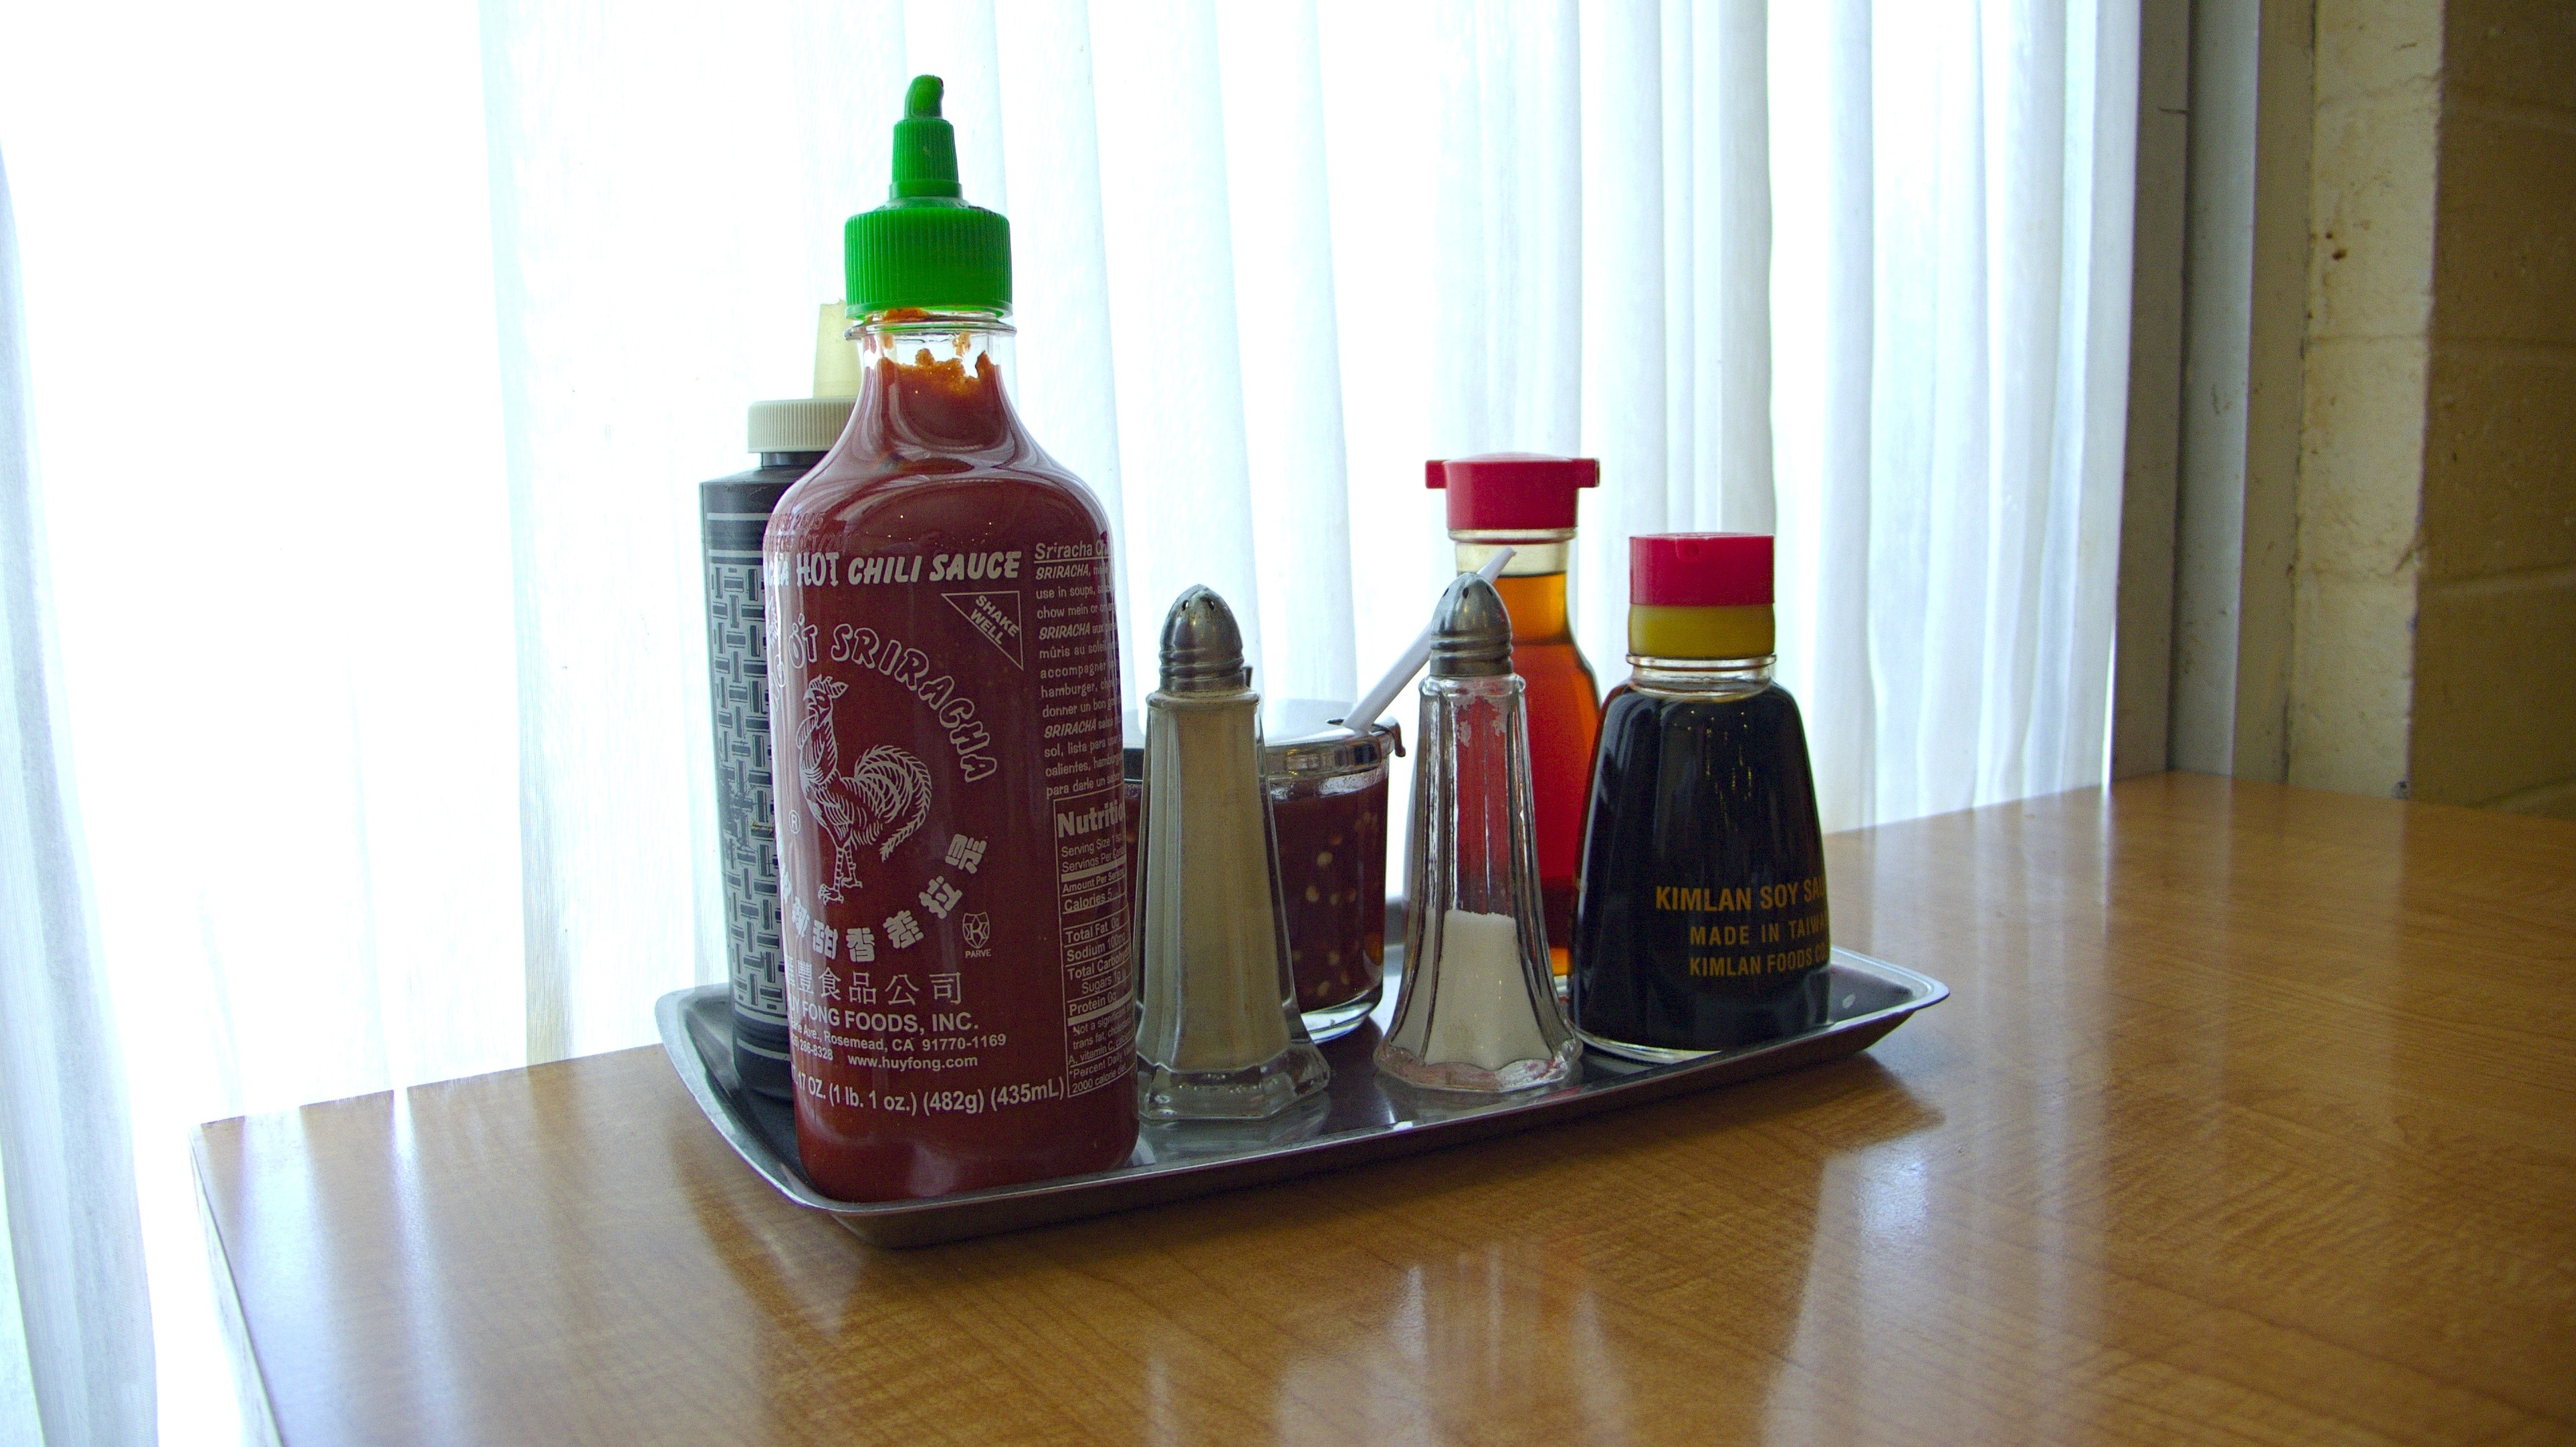 LA Restaurant Will Give Free Food to Anyone Who Brings in Sriracha